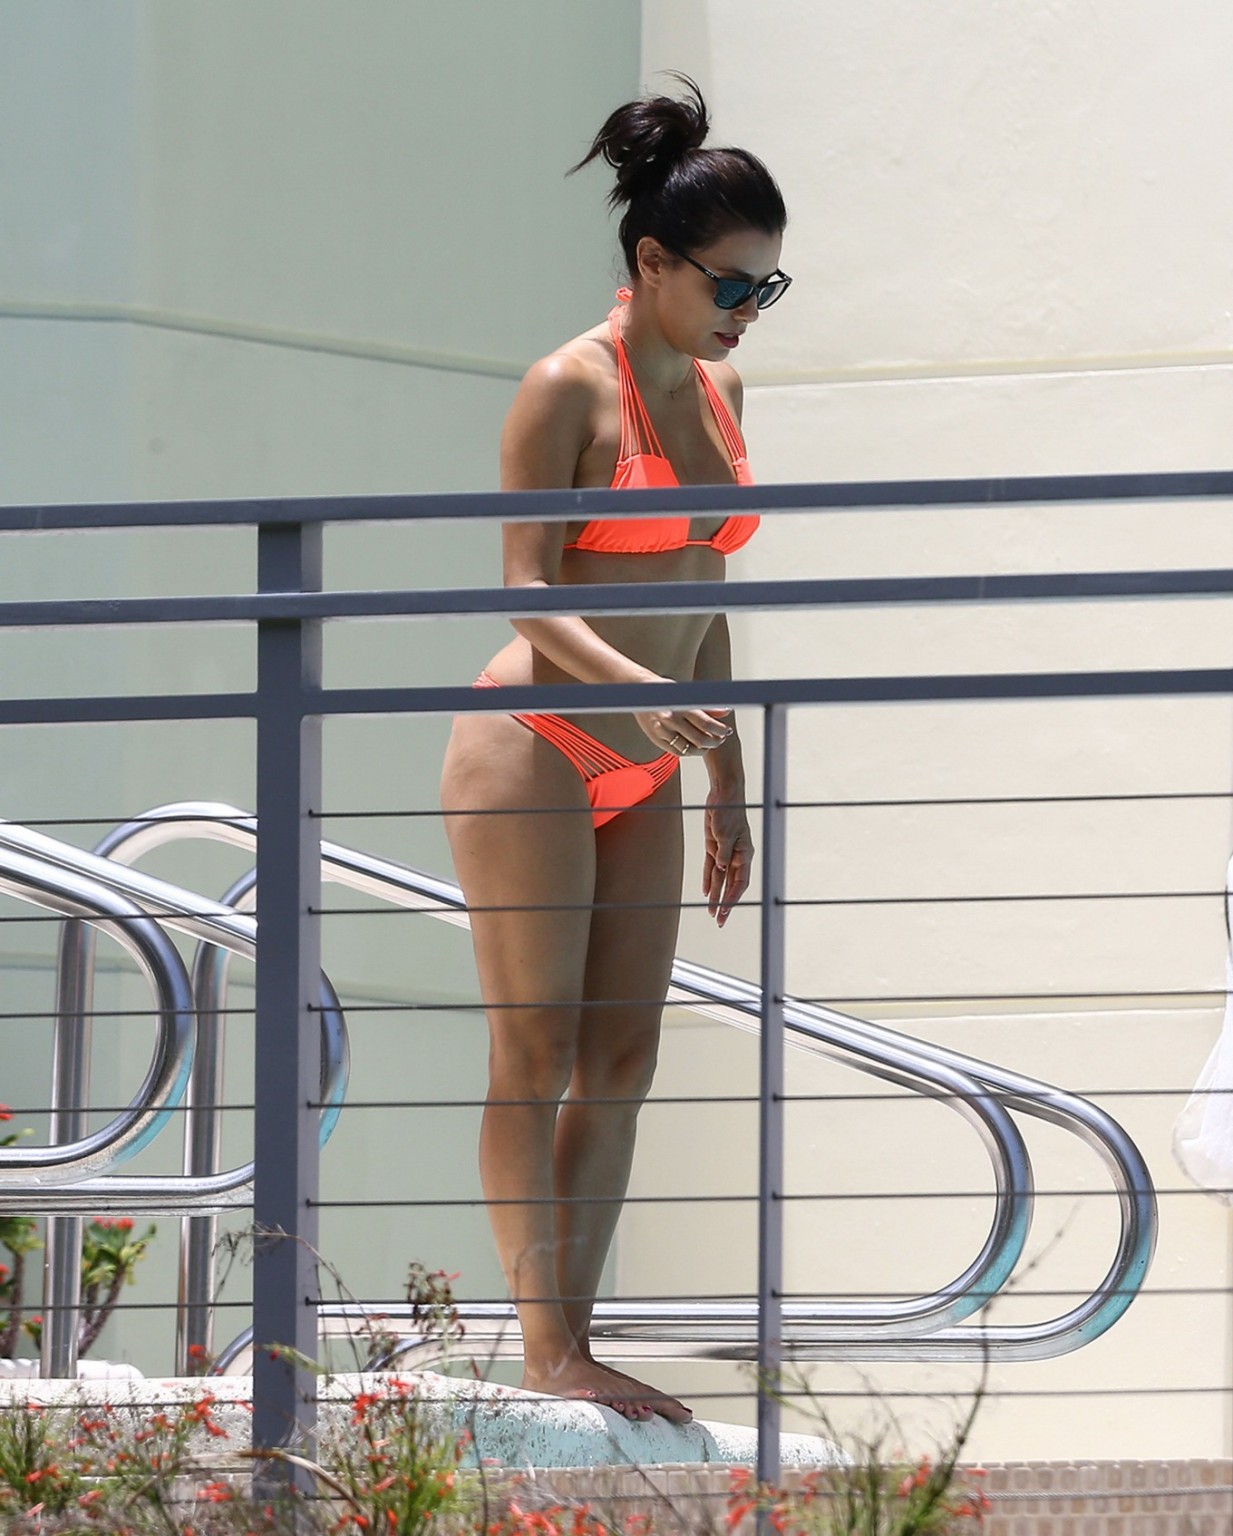 Eva longoria muestra los pokies de los pezones en bikini naranja junto a la piscina
 #75160099